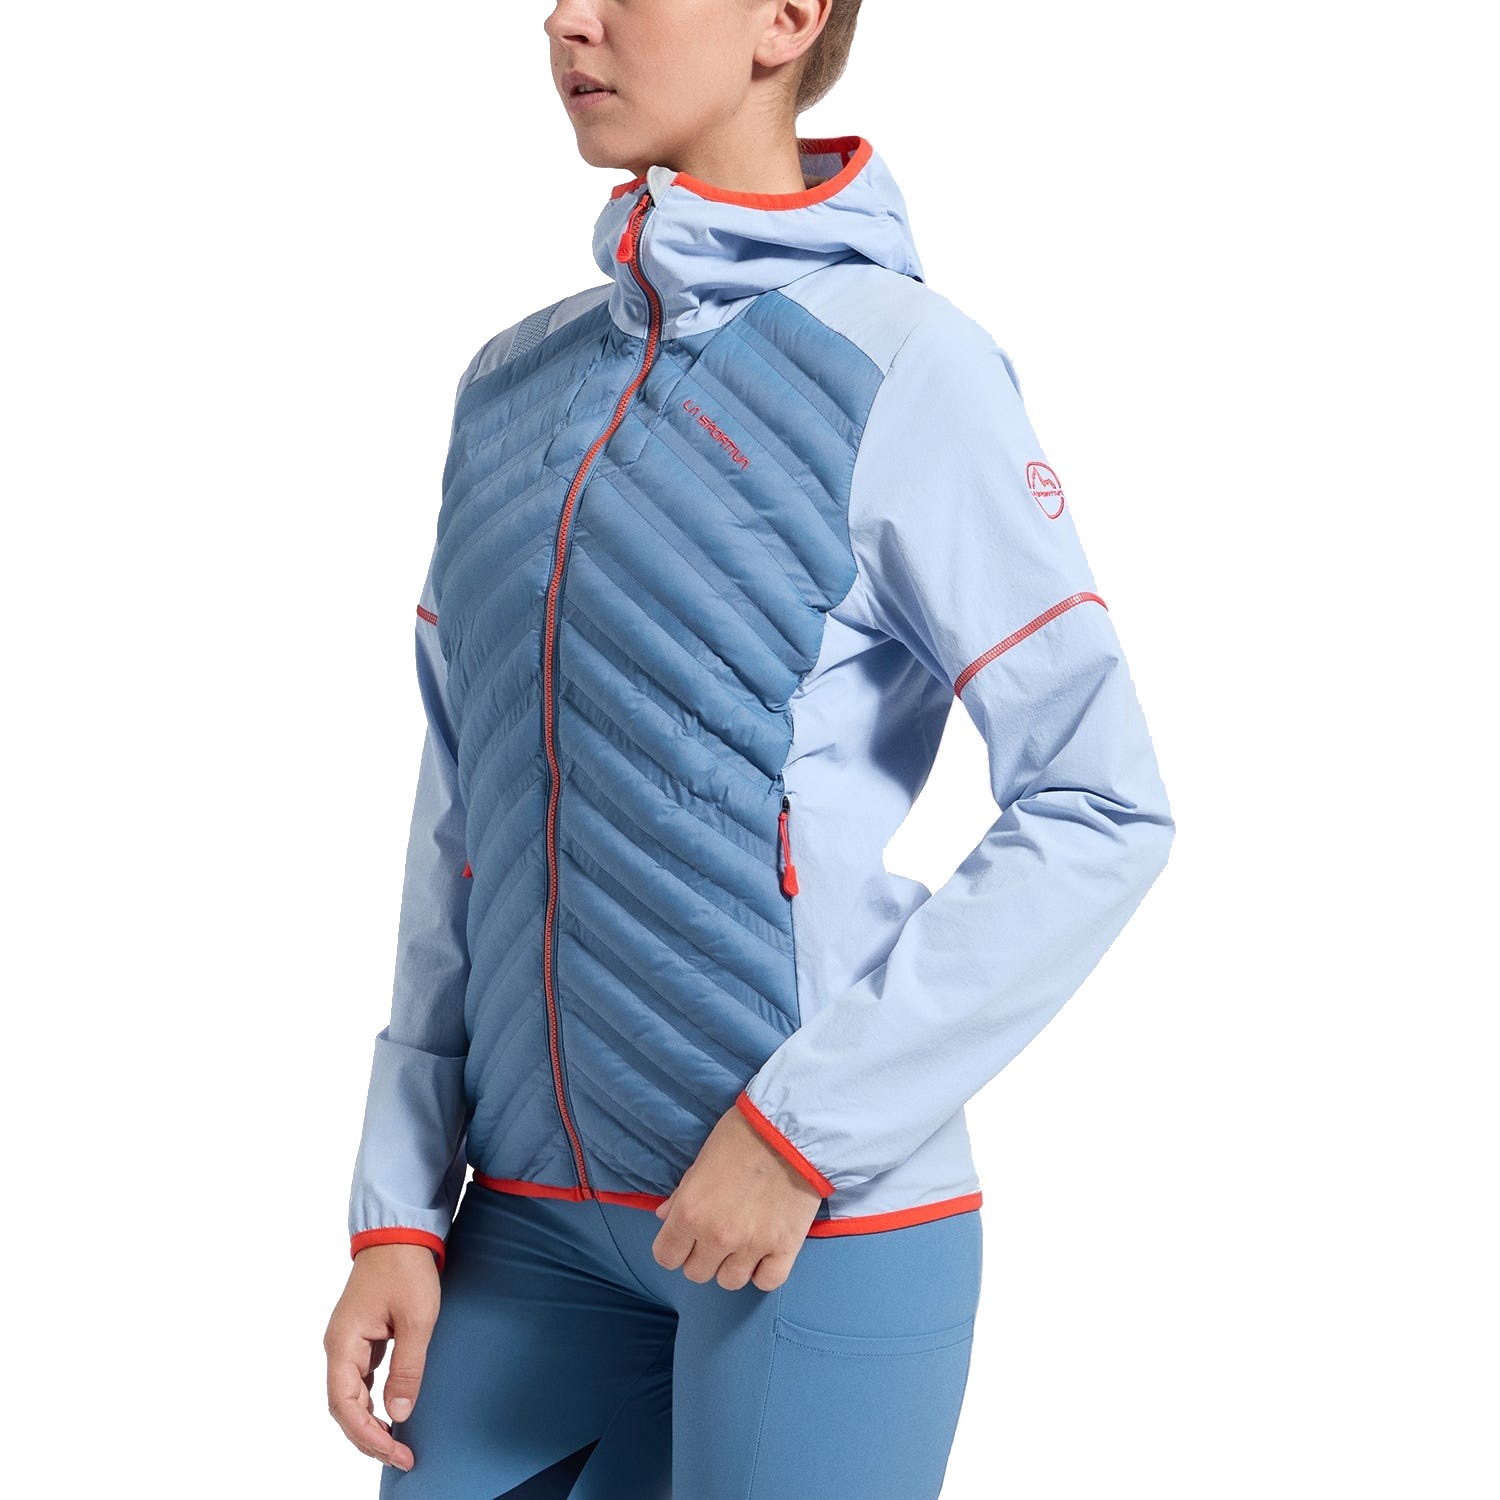 La Sportiva Koro Women's Insulated Runner Jacket